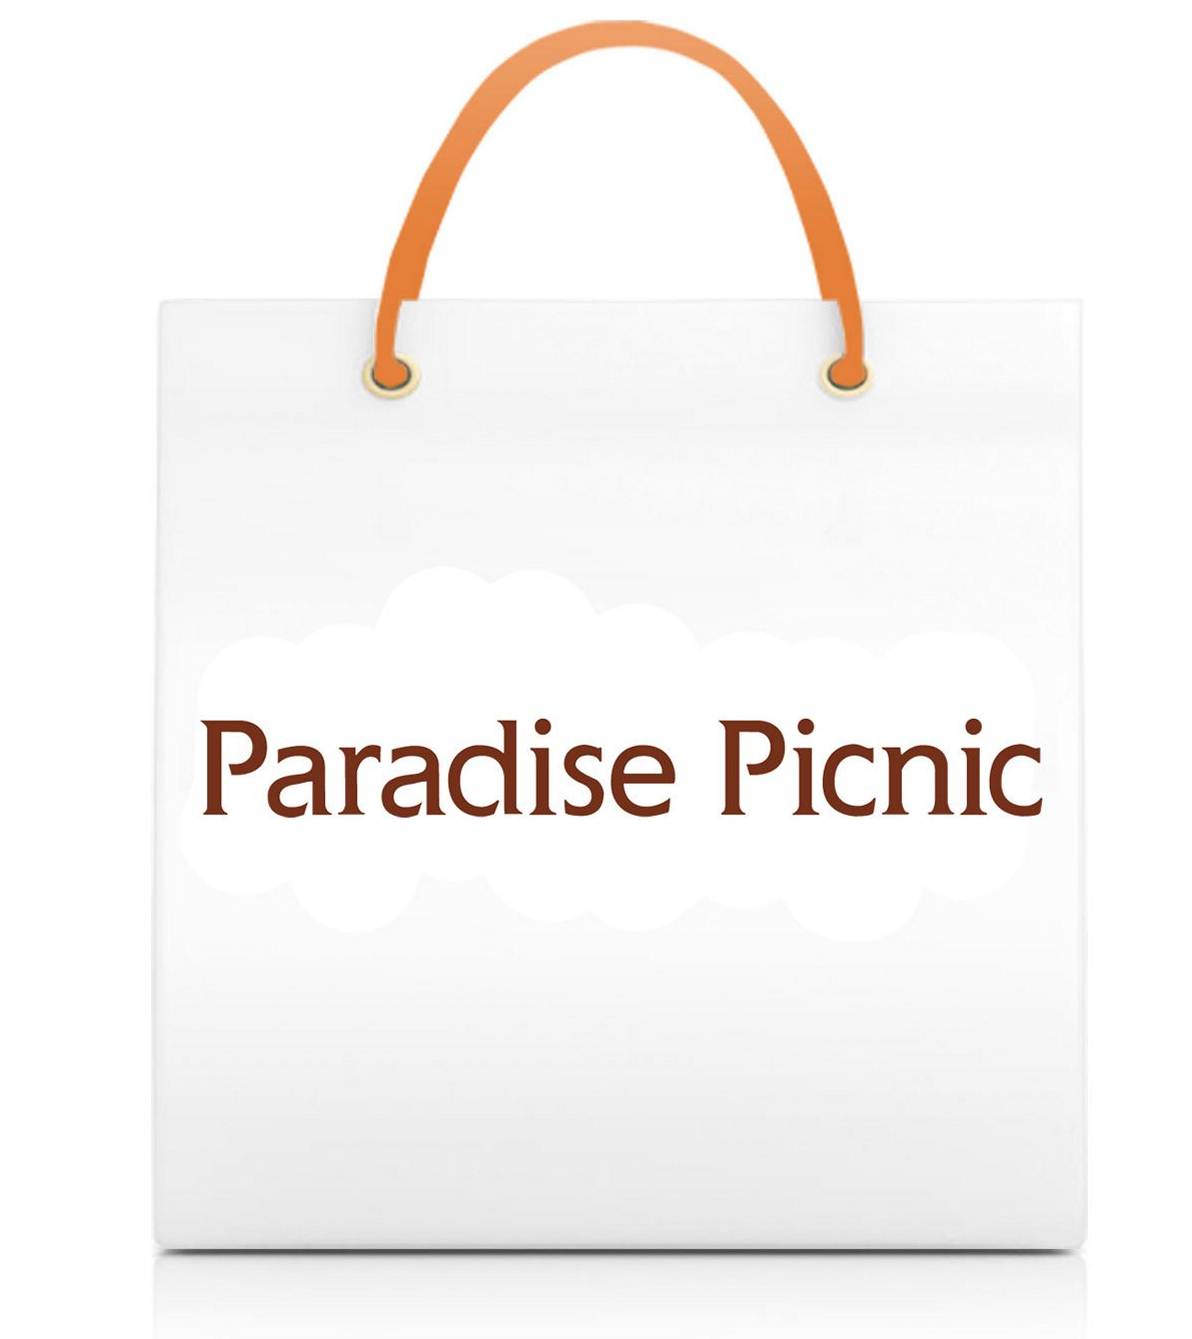 Paradise Picnic 2013 福袋 (總值55,000~60,000日元, 共7~8件)